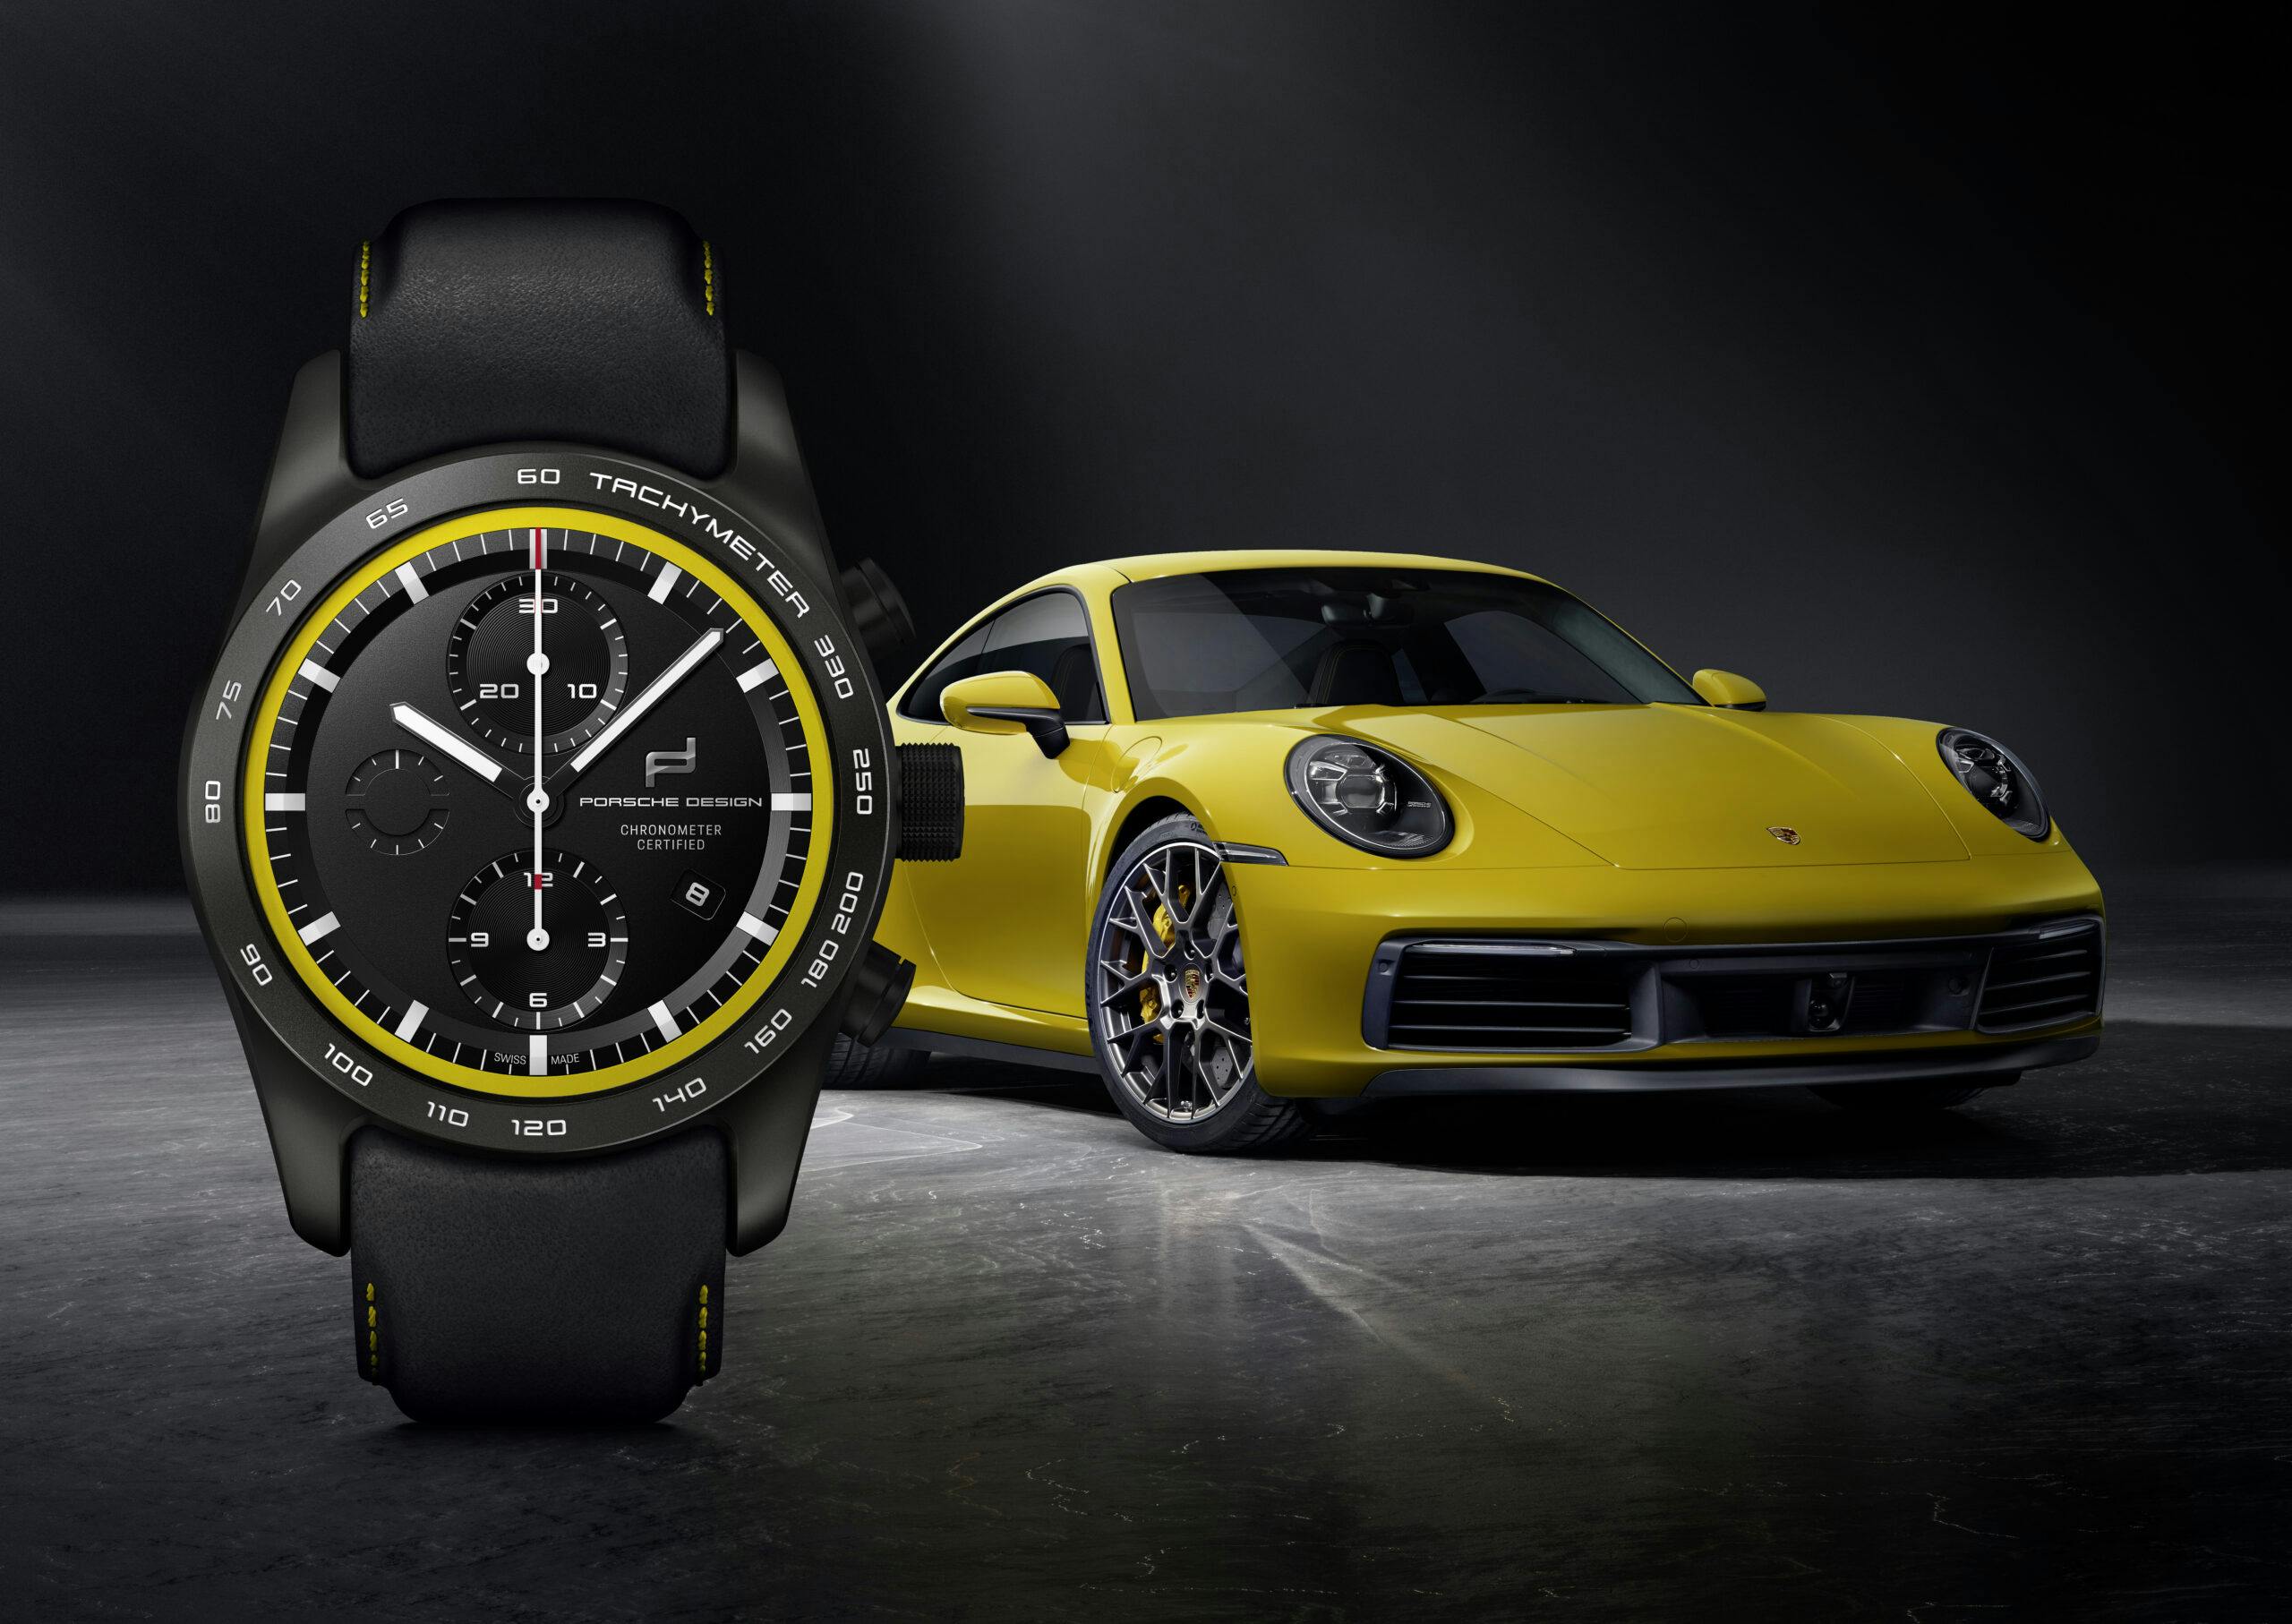 KV_custom-built_Timepiecs_911_Carrera_4S_Racing_Yellow_Black